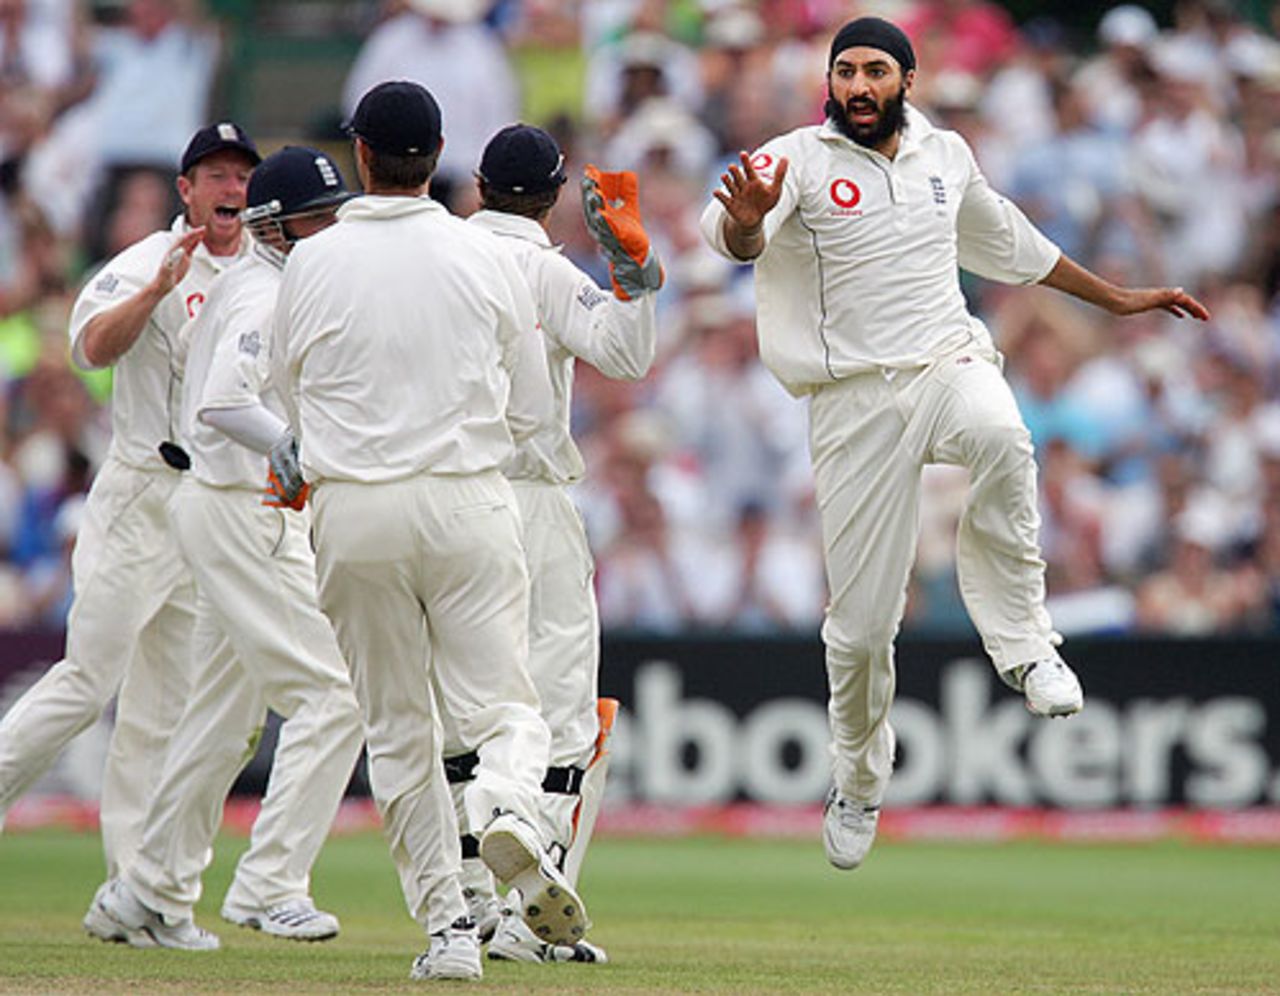 Monty Panesar celebrates the removal of Imran Farhat, England v Pakistan, 2nd Test, Old Trafford, July 29, 2006